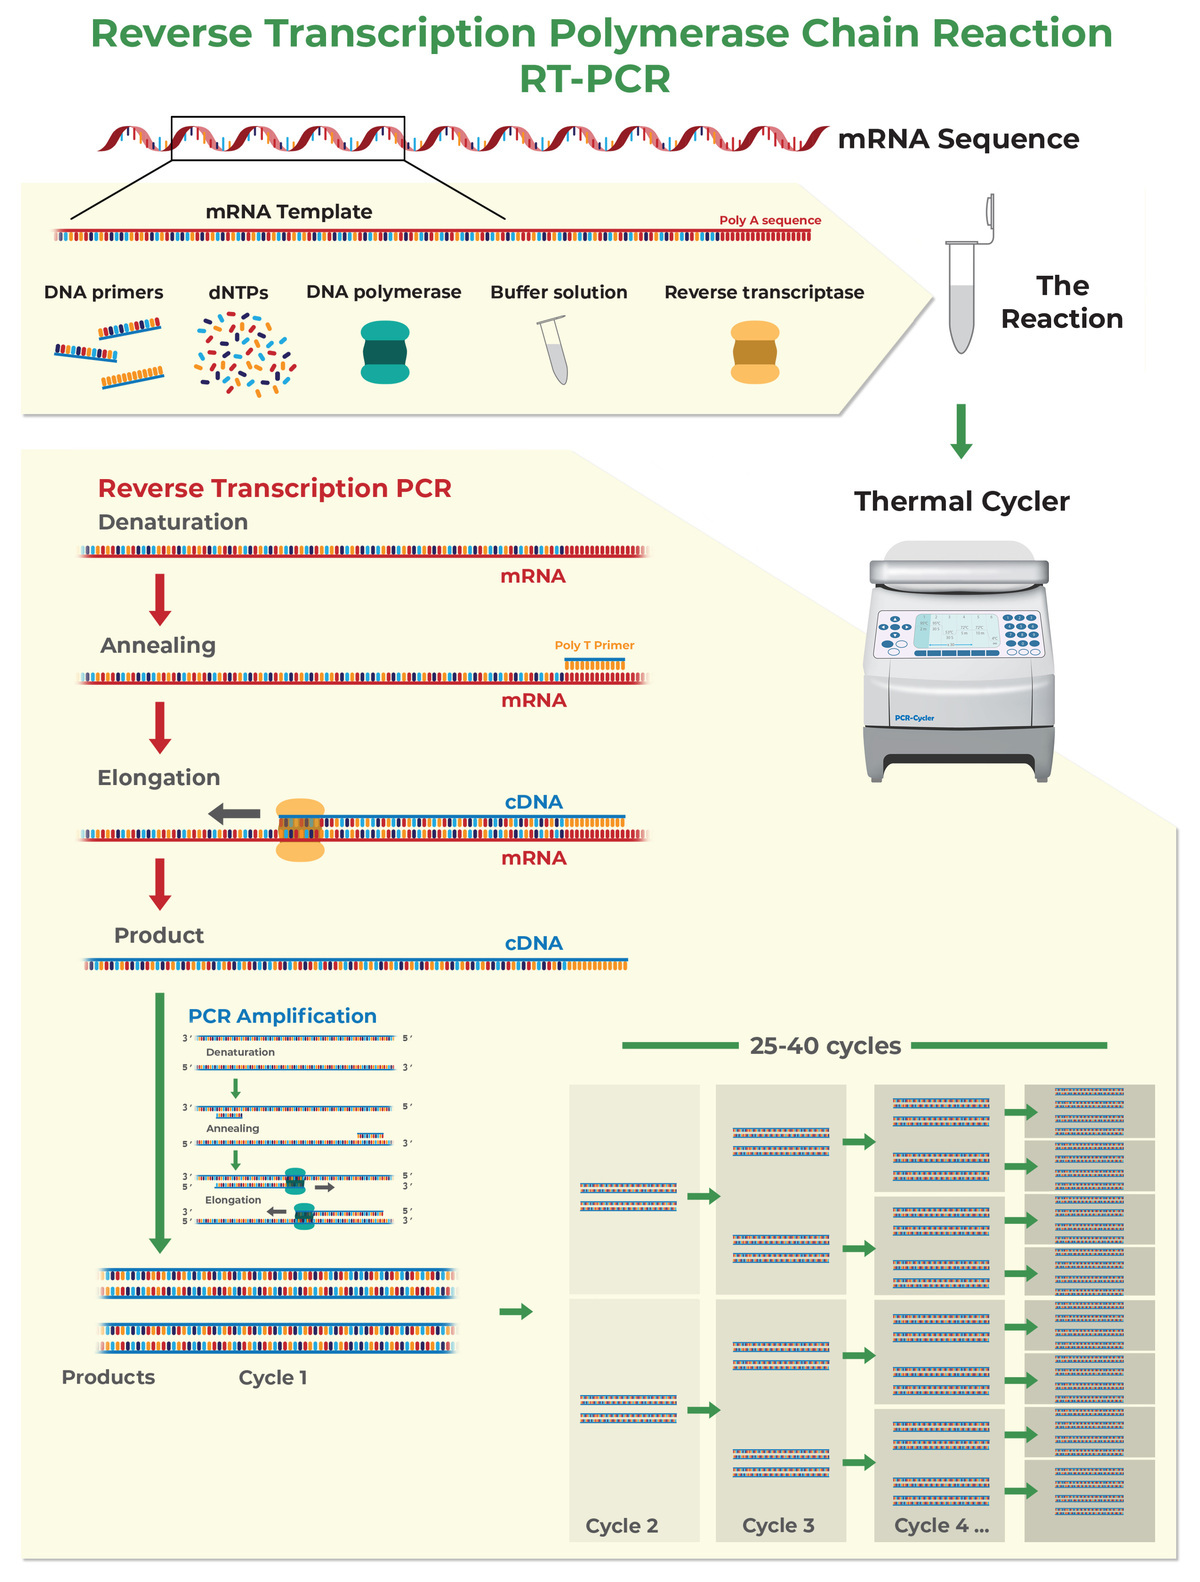 RT-PCR 실험과정